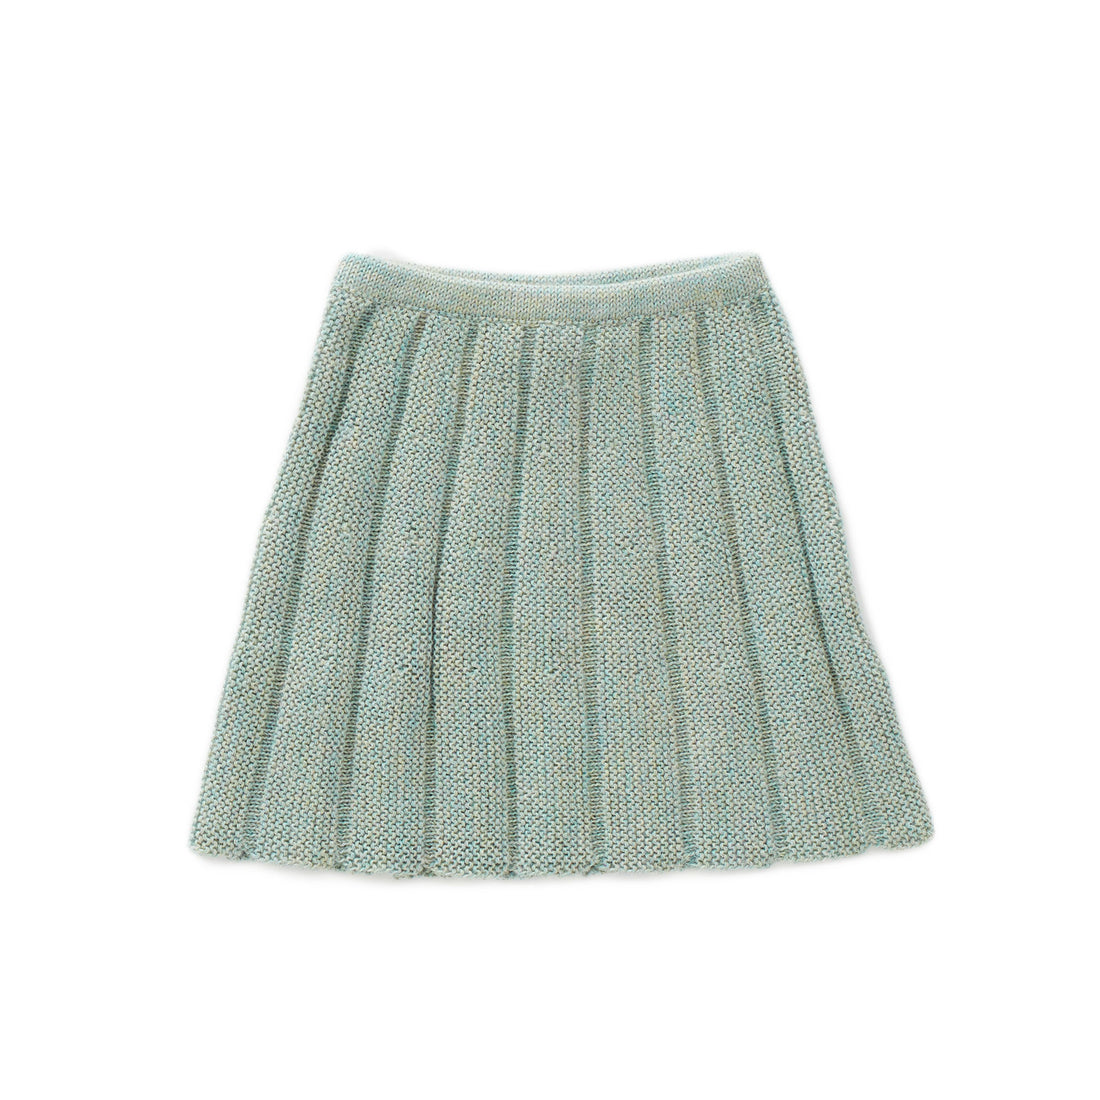 Oeuf Ocean Everyday Skirt